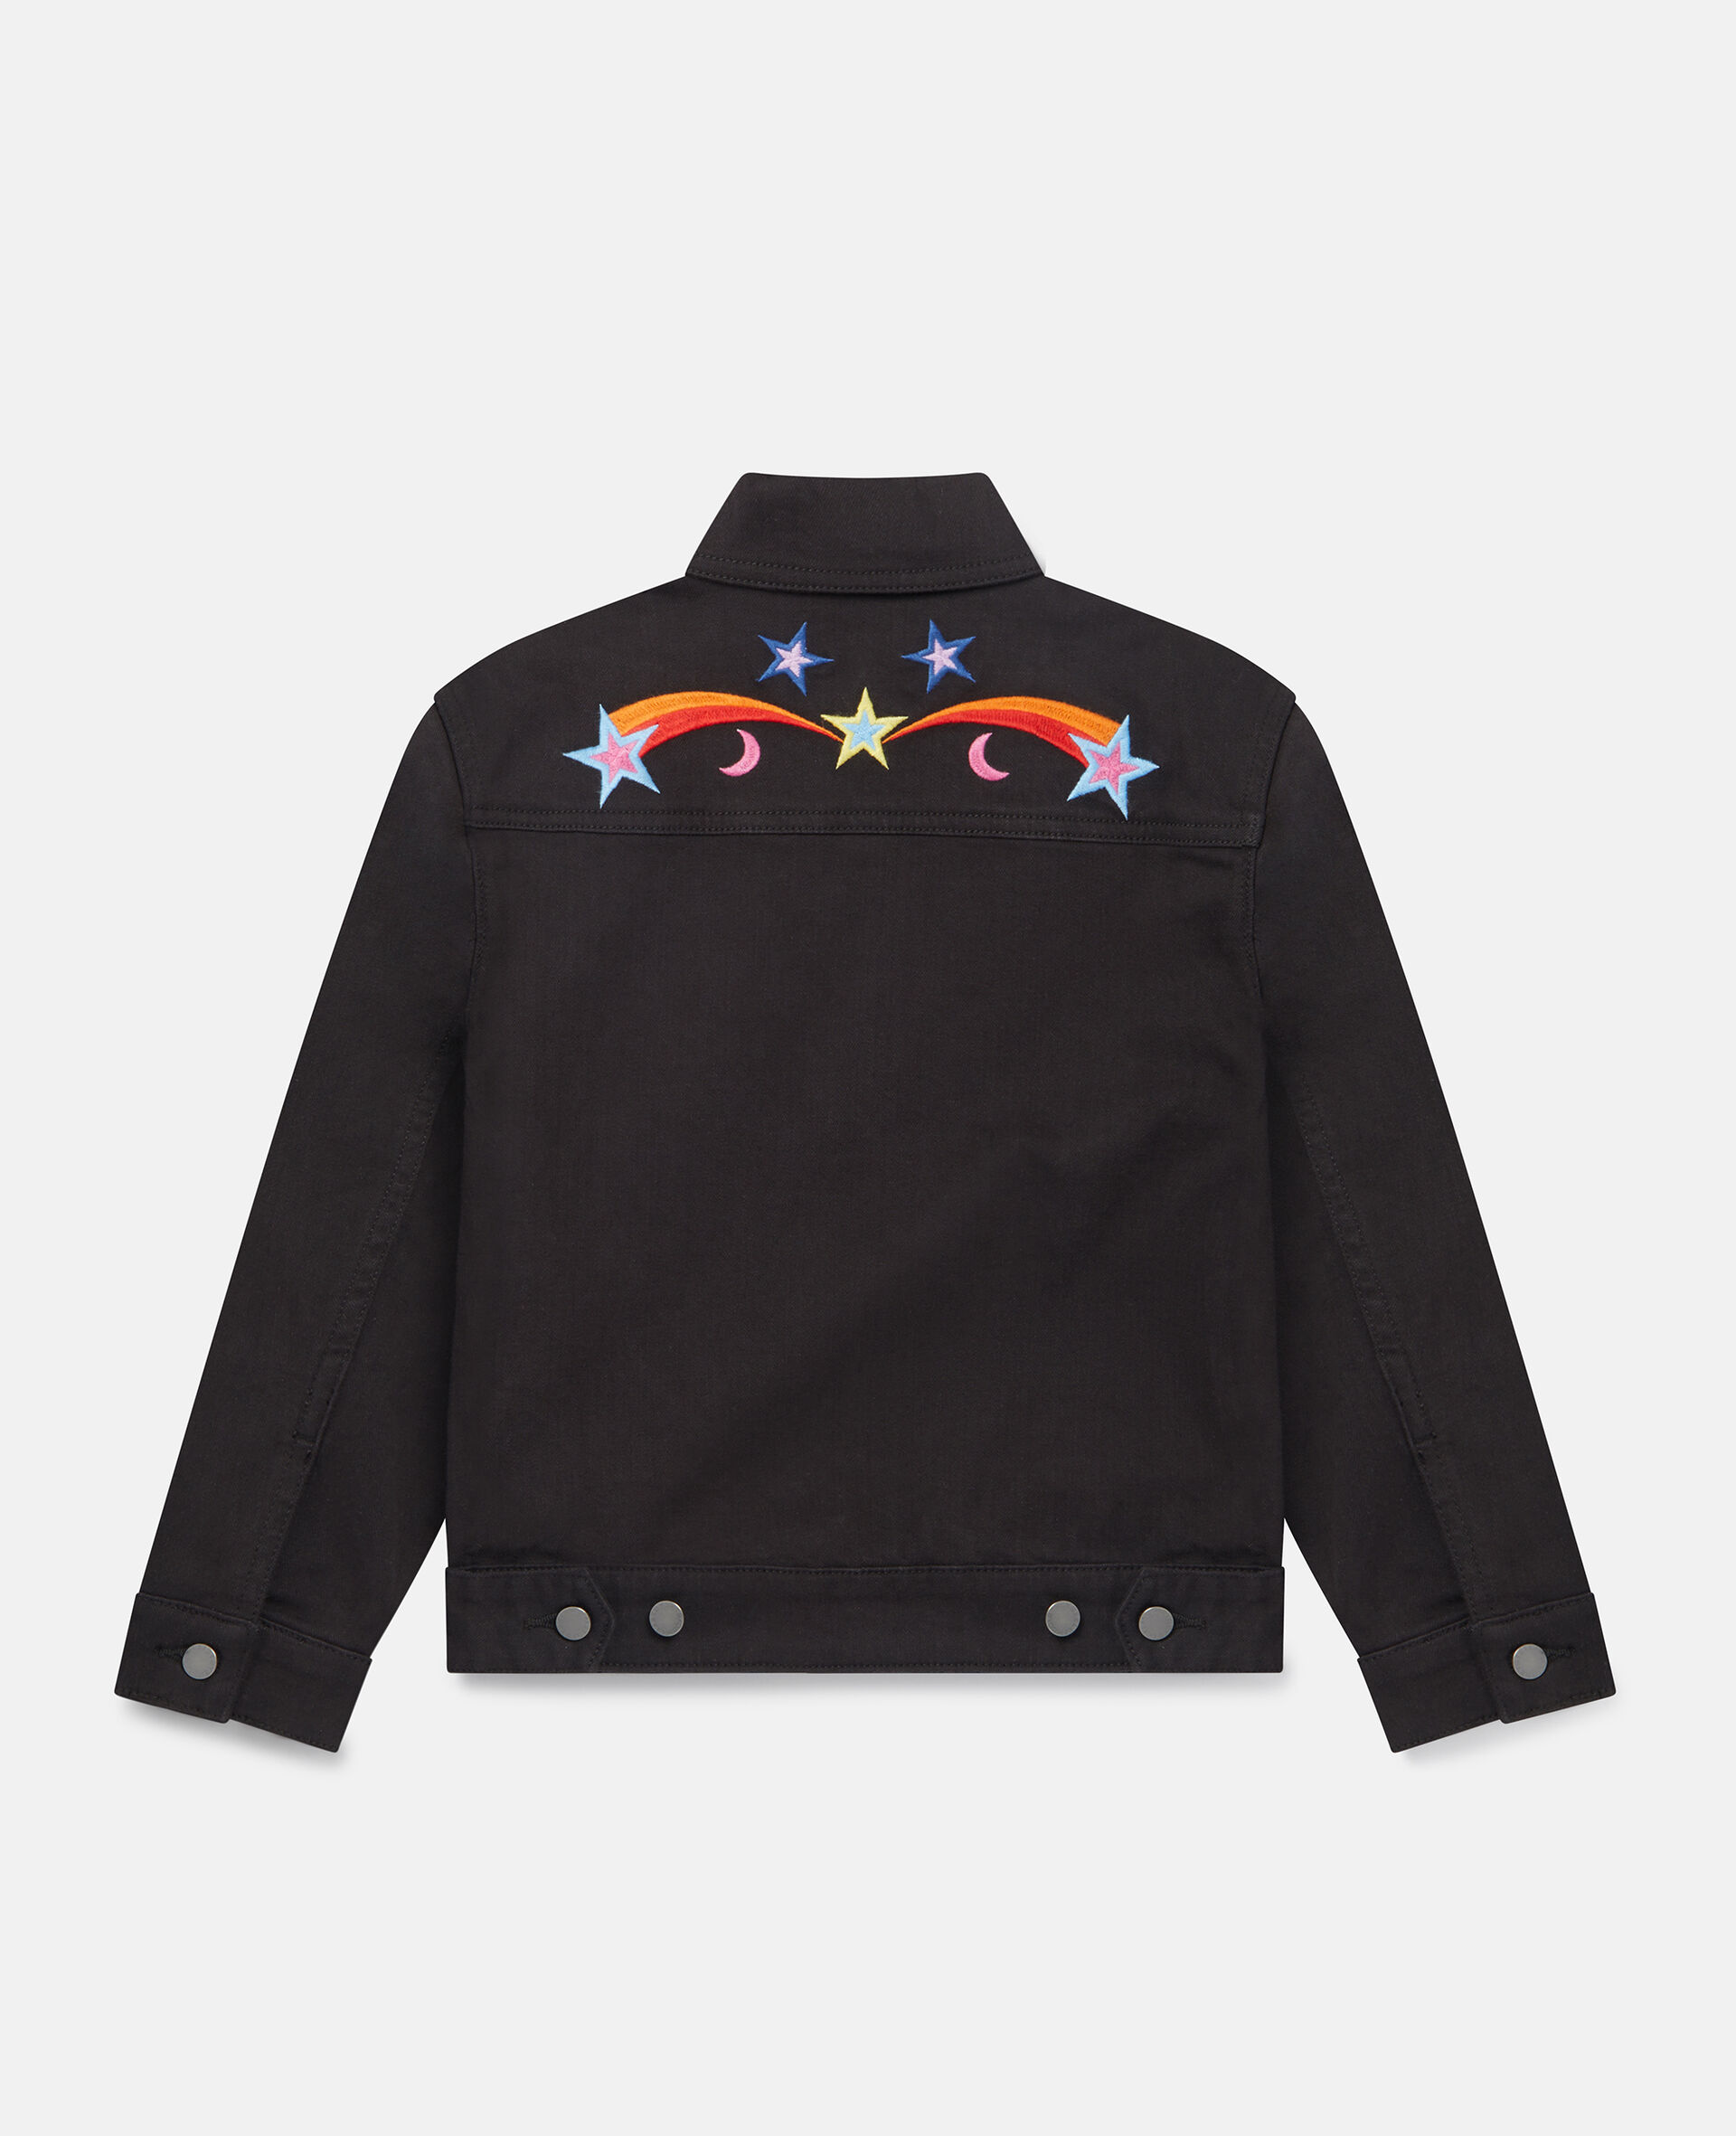 Cosmic Embroidered Gabardine Jacket-Black-large image number 2